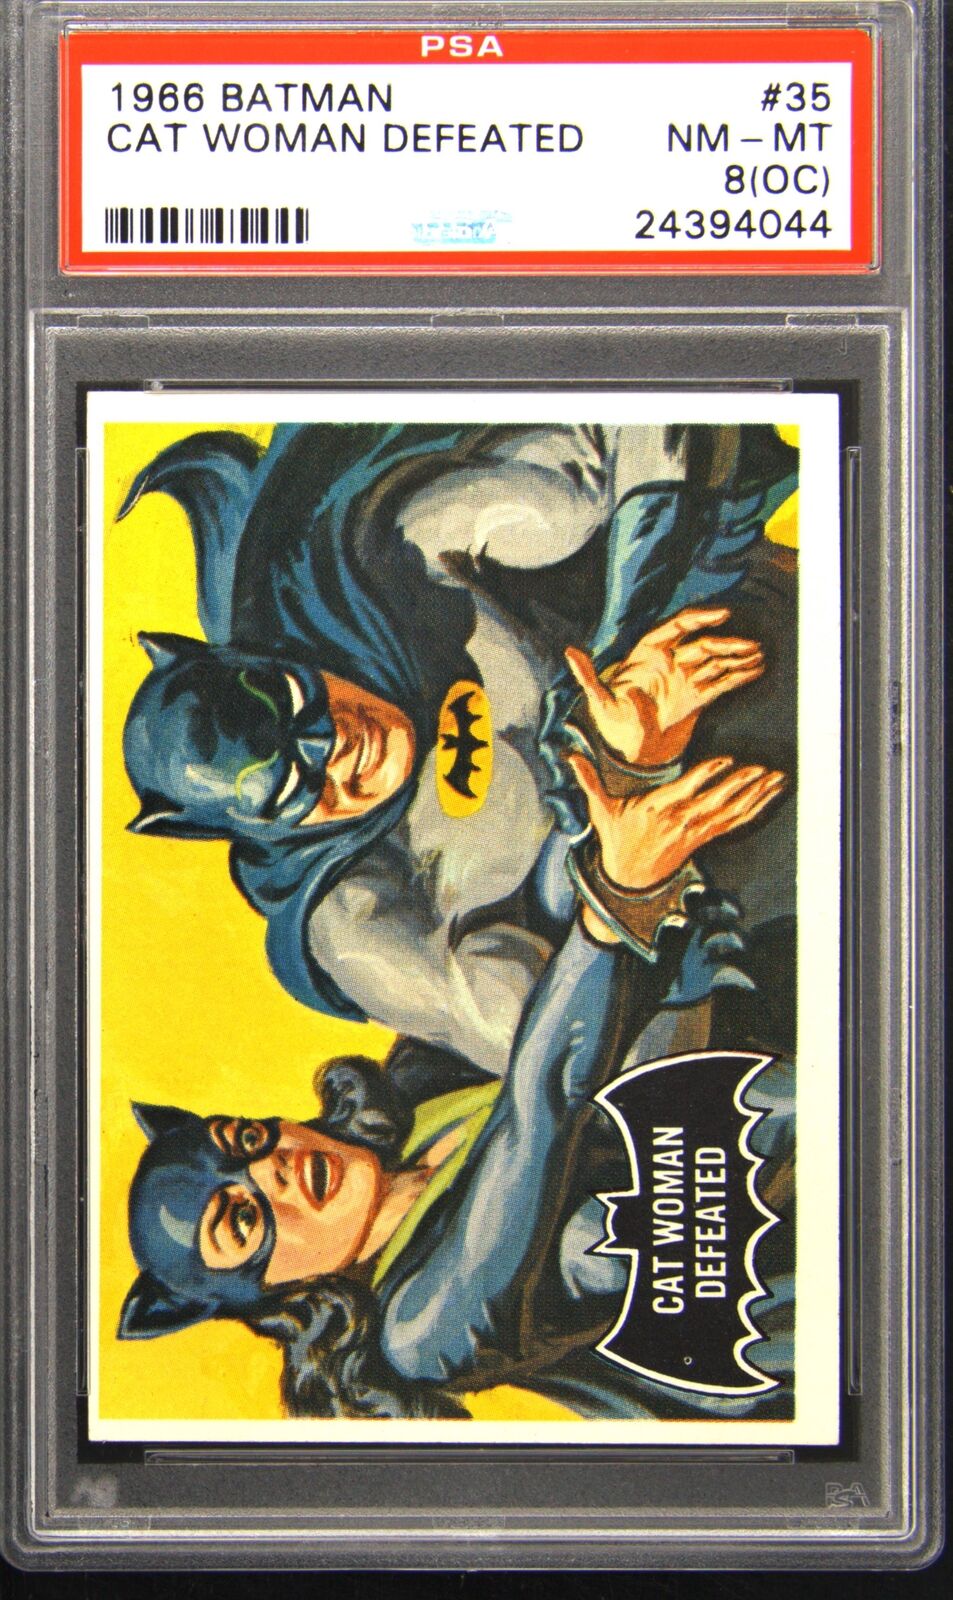 1966 35 Cat Woman Defeated Batman Card PSA 8